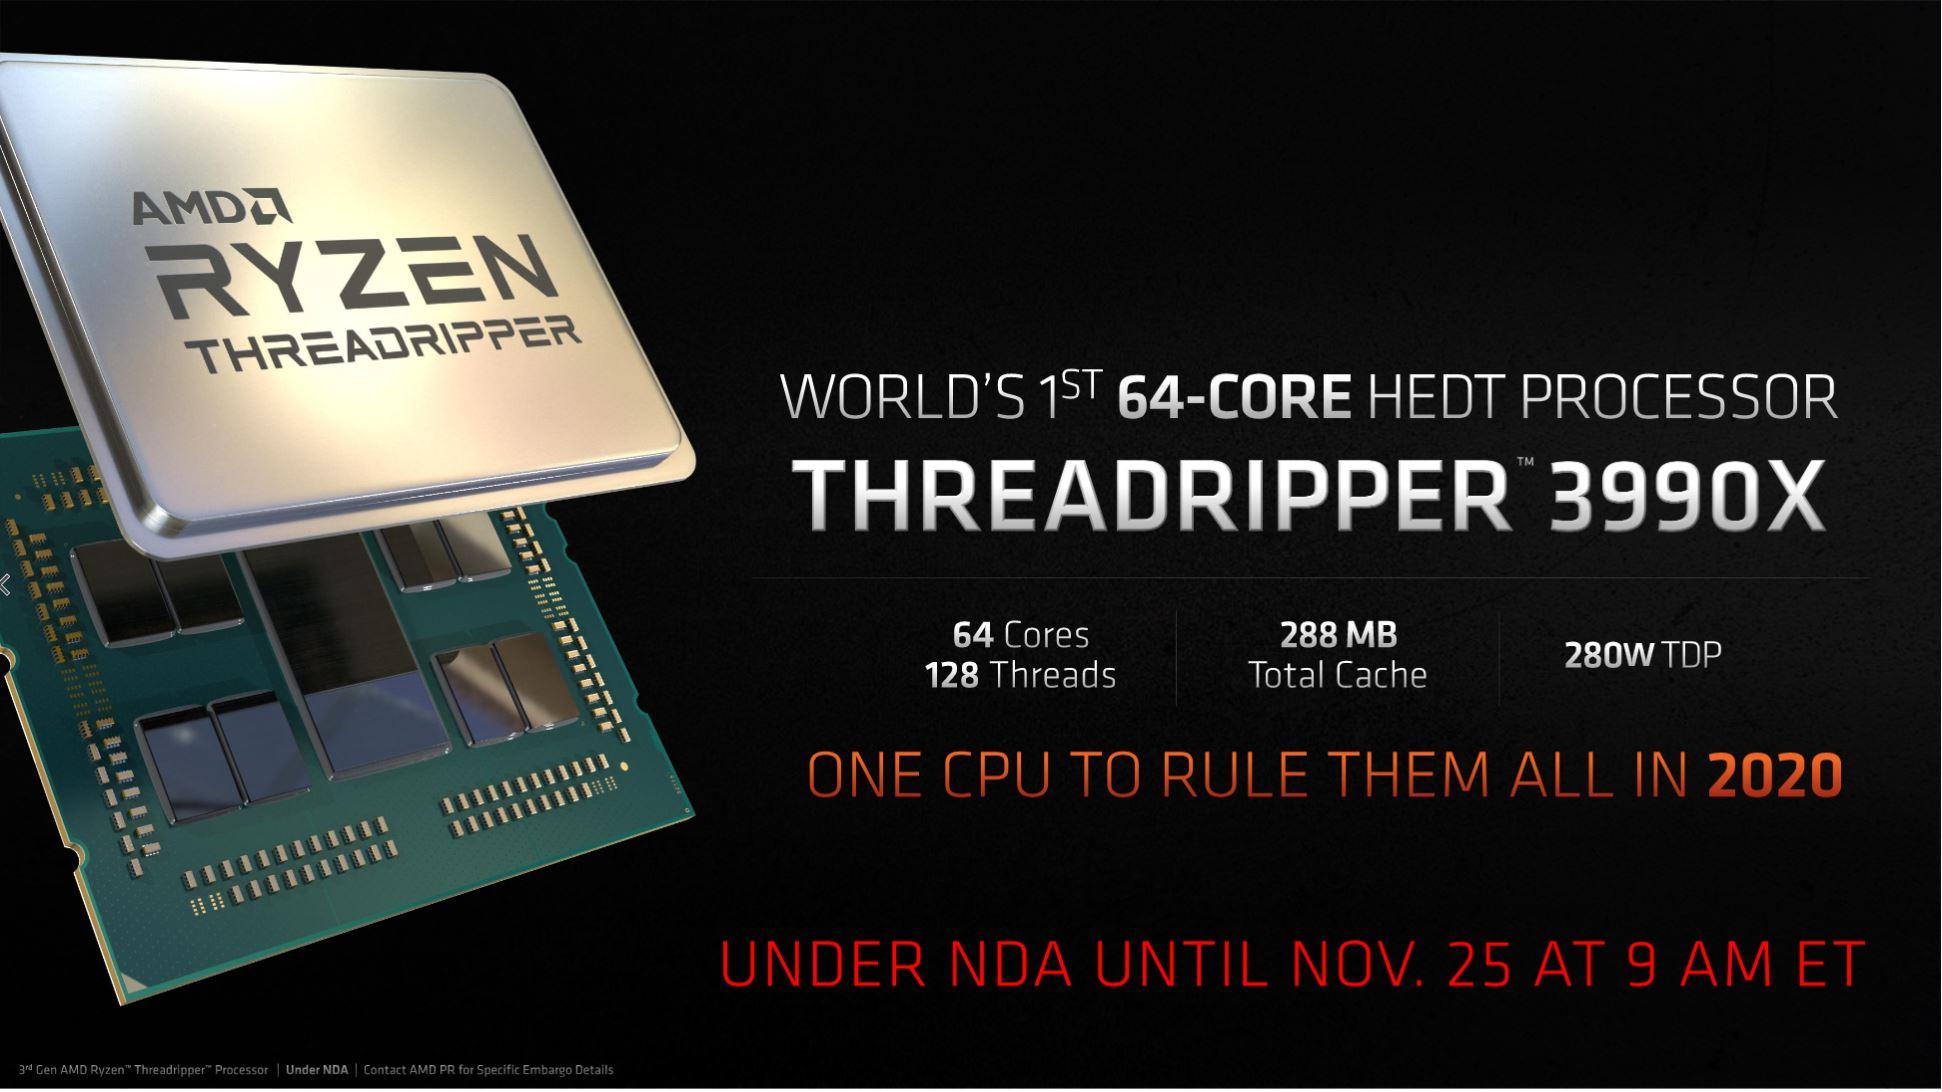 «One CPU to rule them all»... ingen nåde fra AMD. 